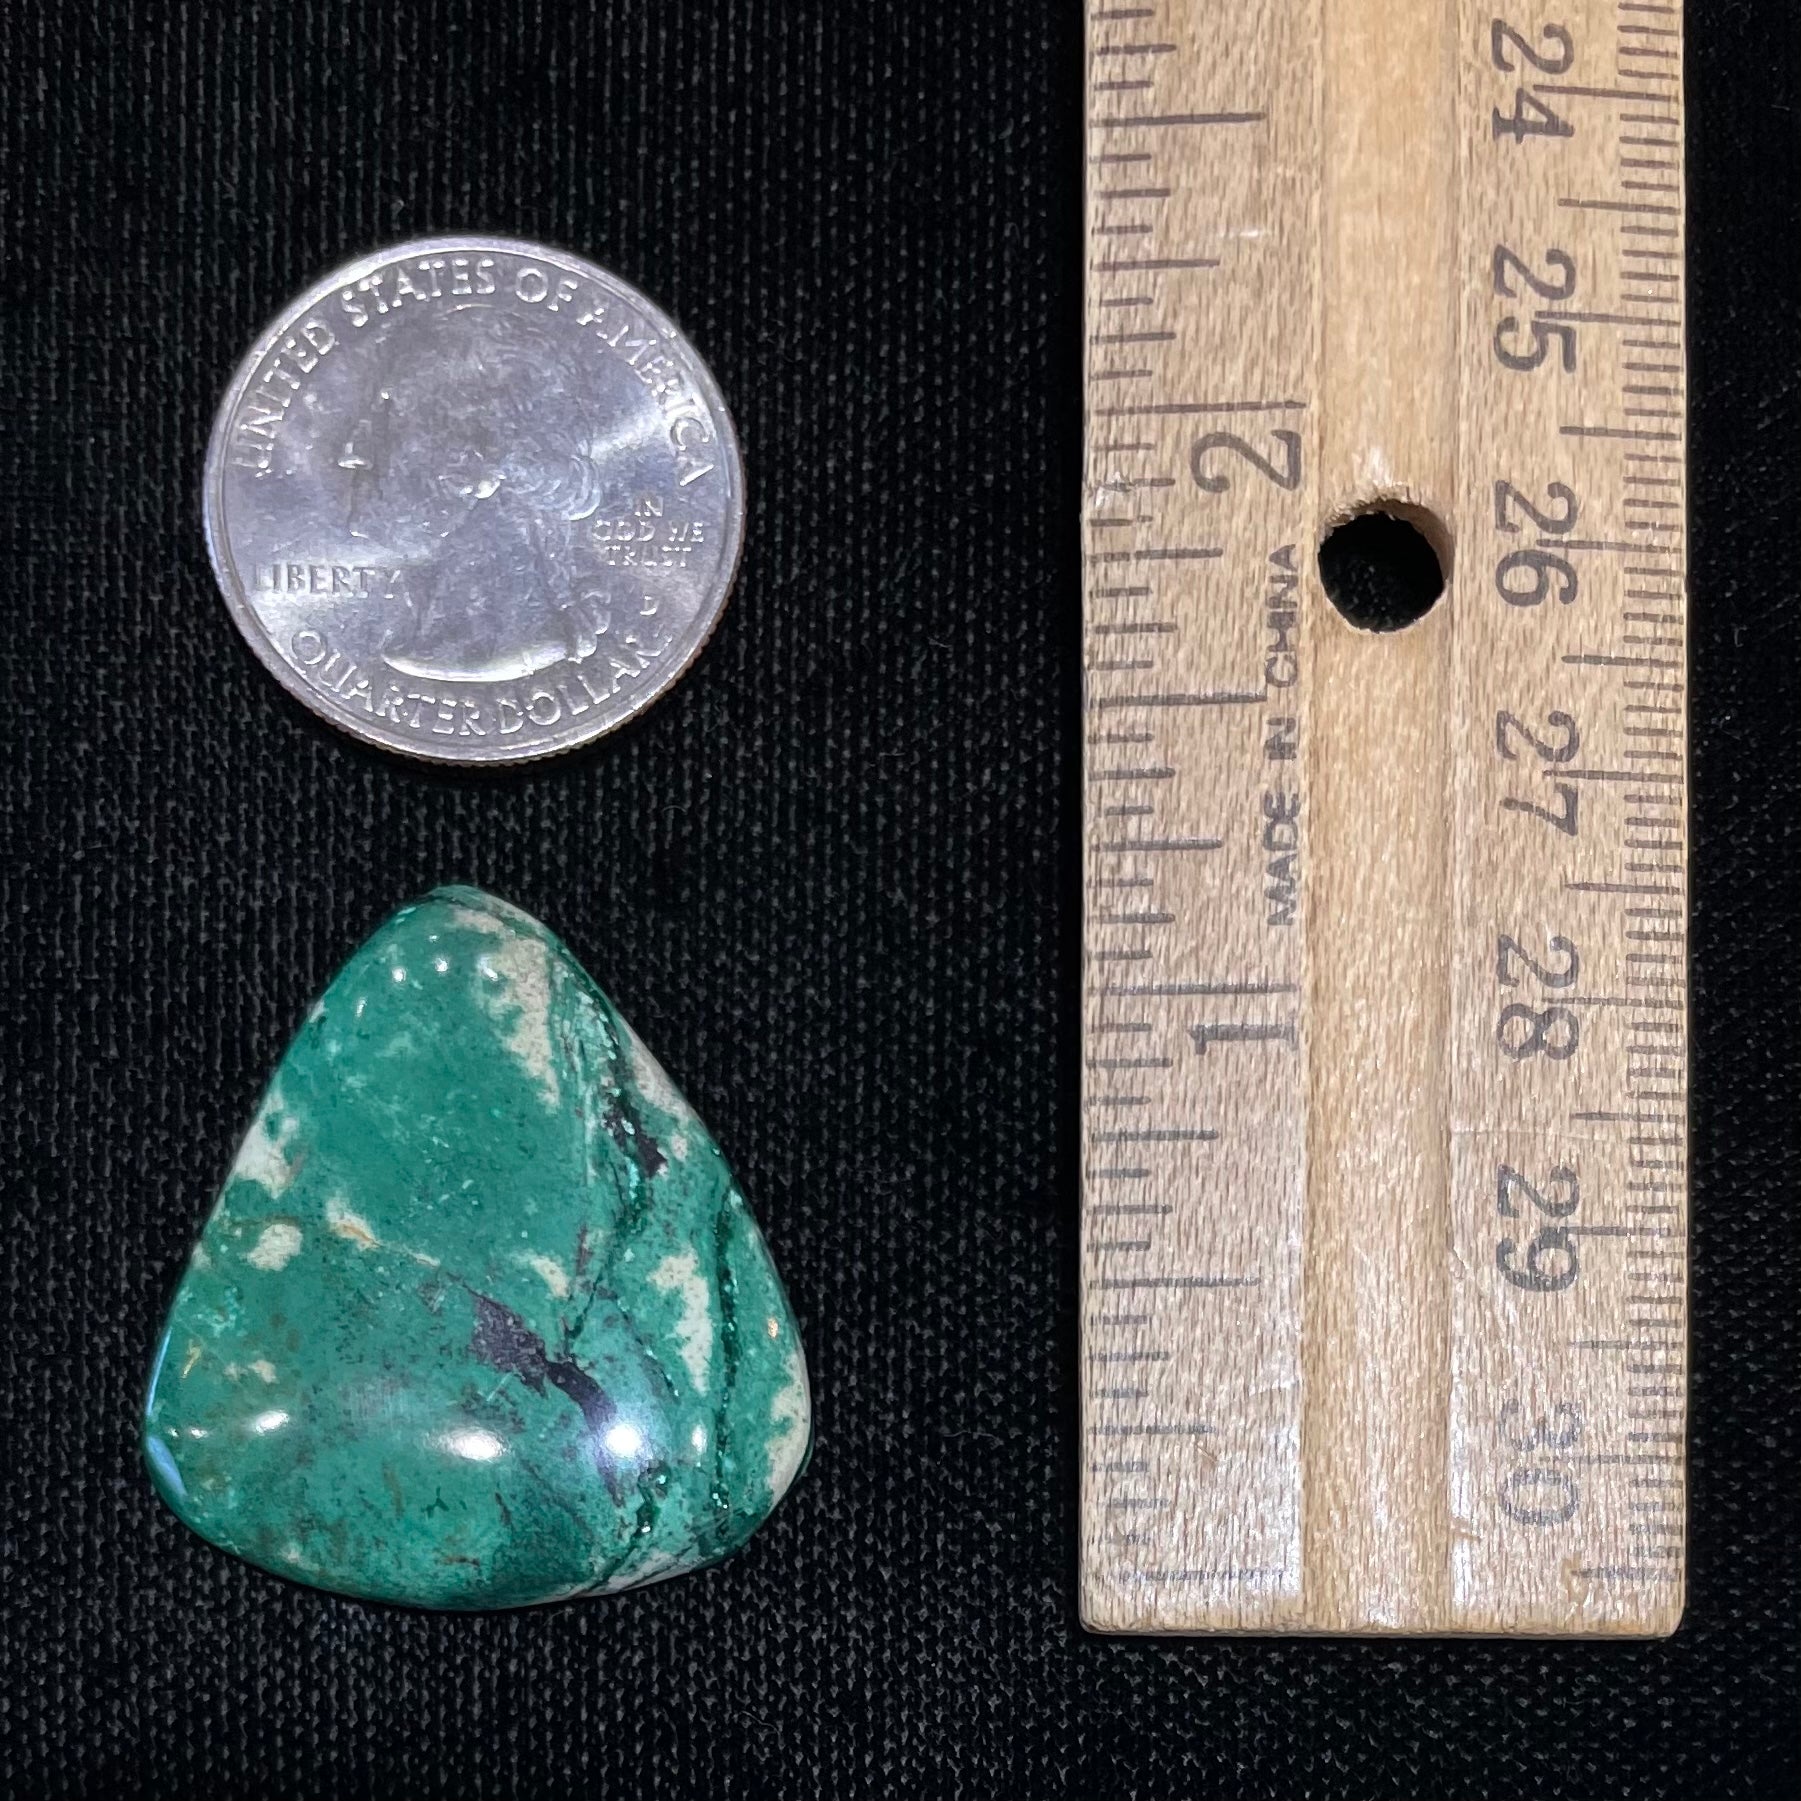 A loose, triangular cabochon cut variscite stone from Utah, USA.